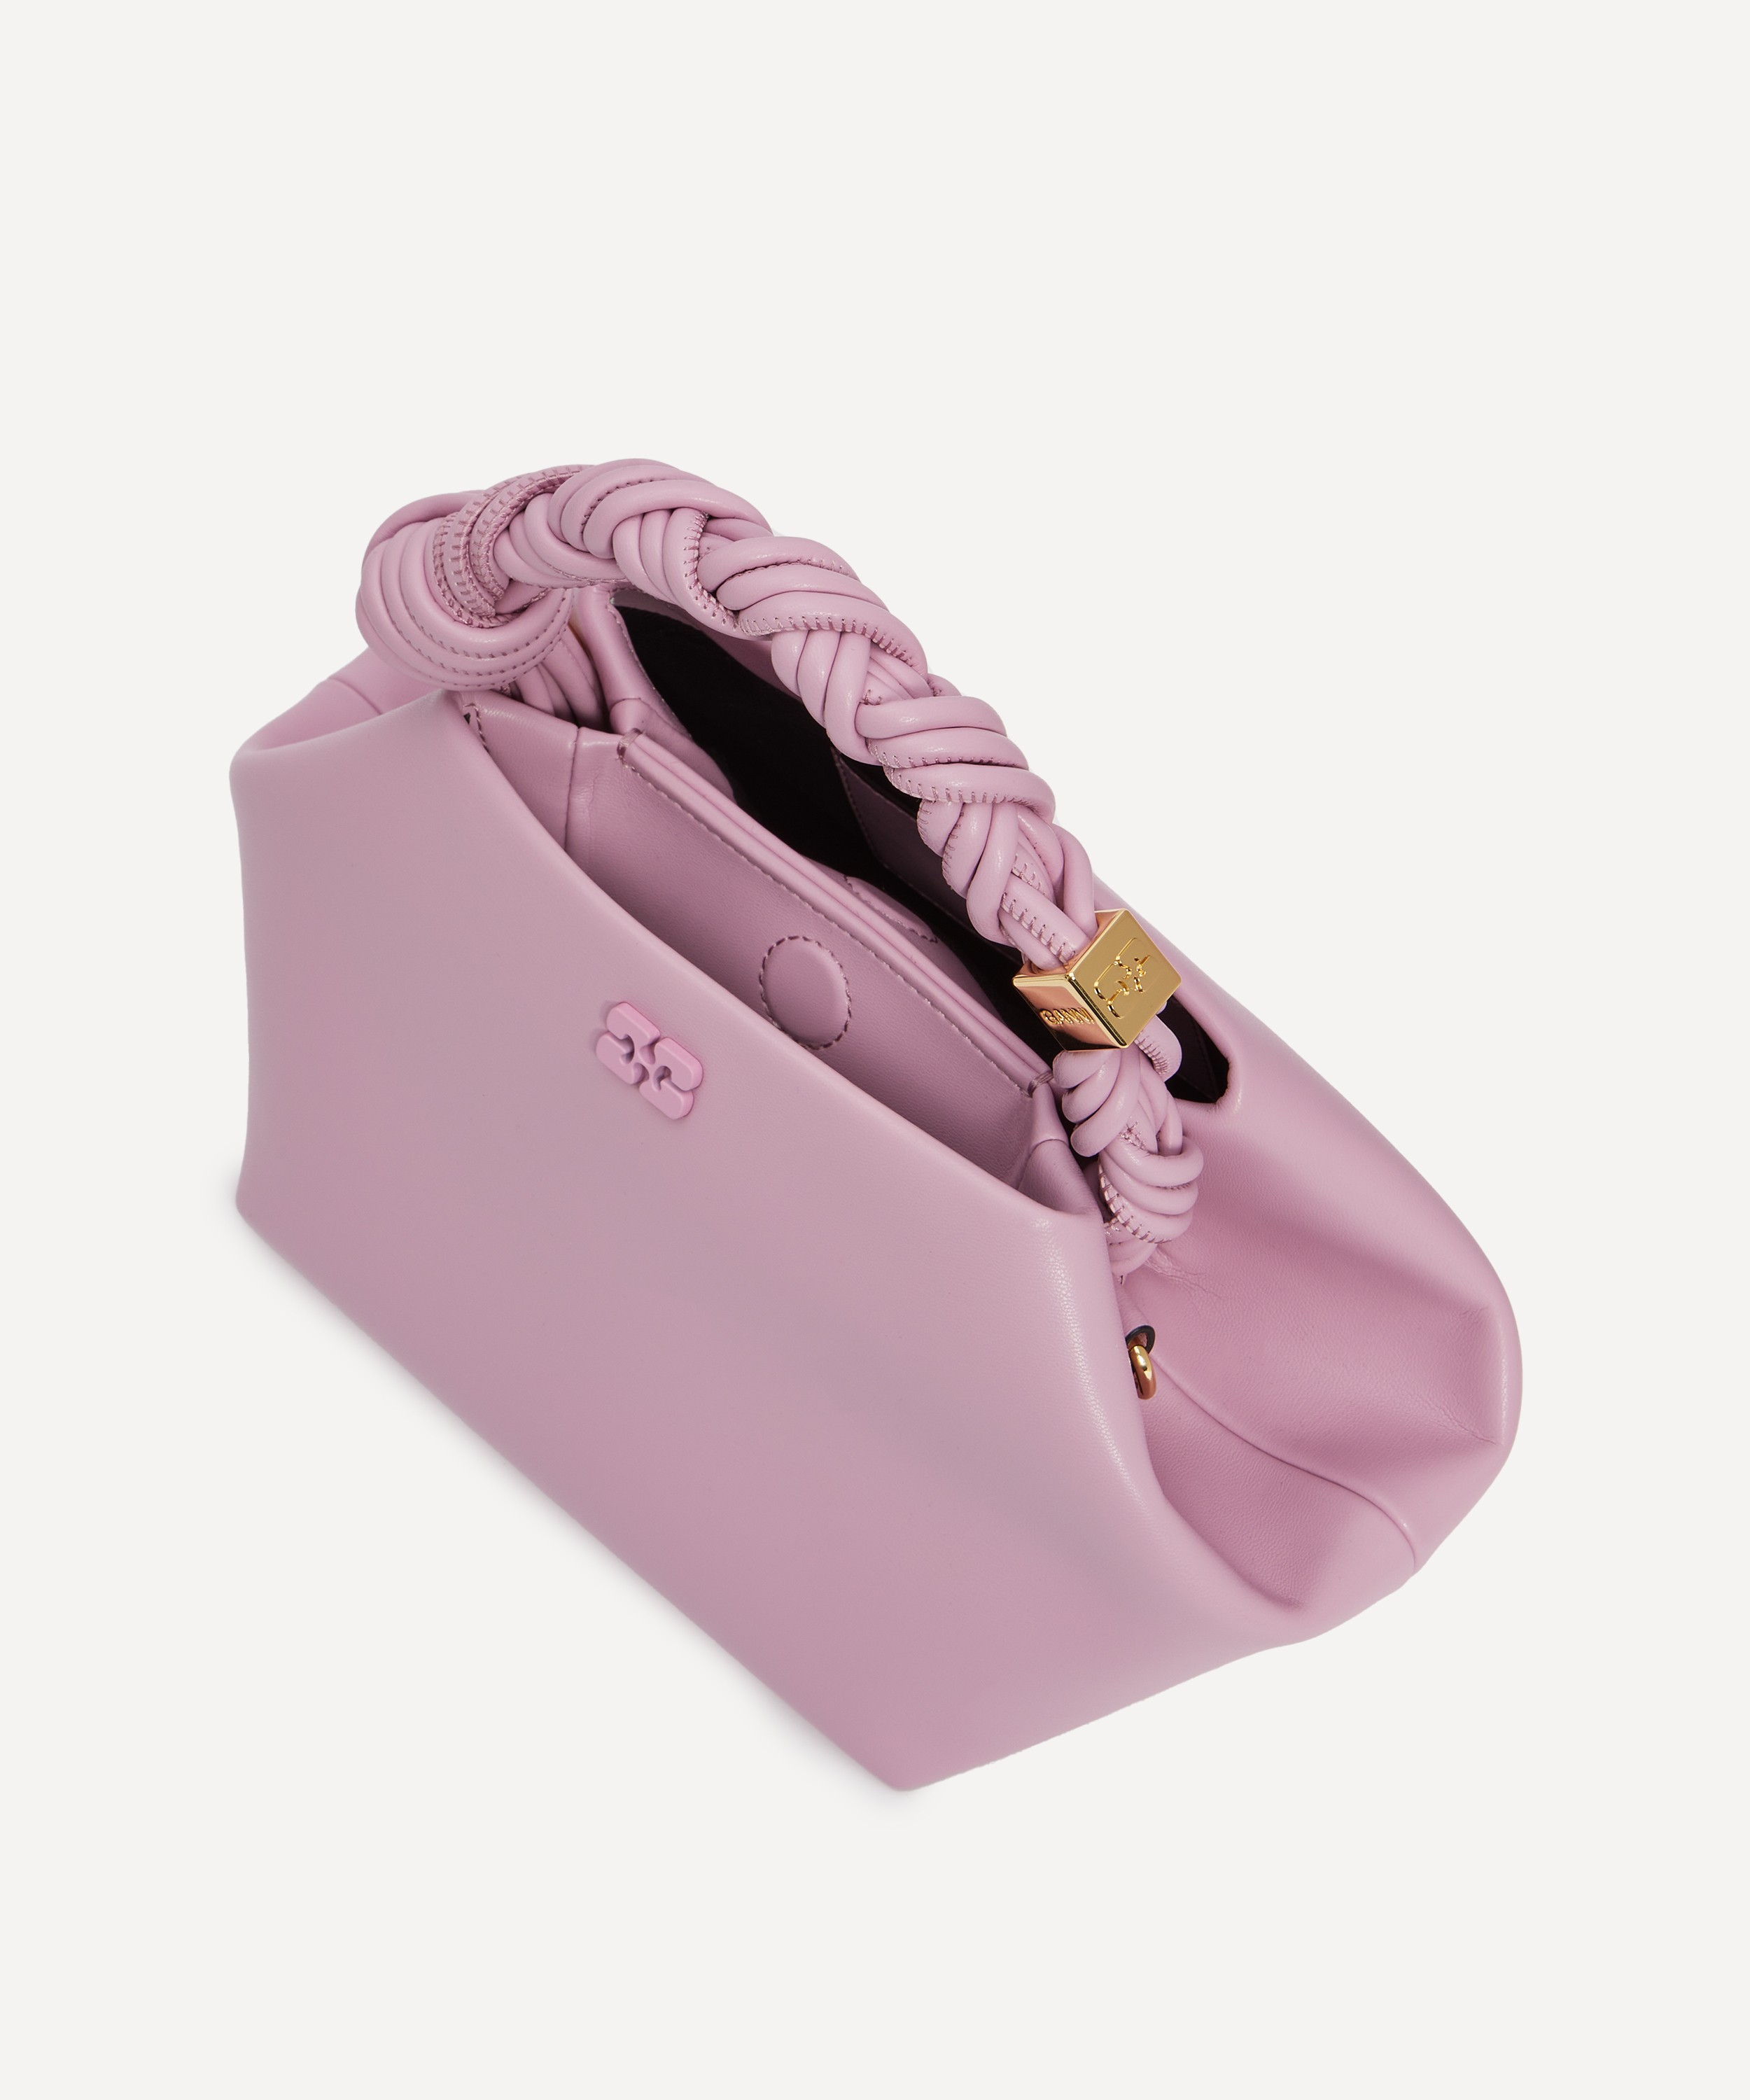 Light Pink Small GANNI Bou Bag